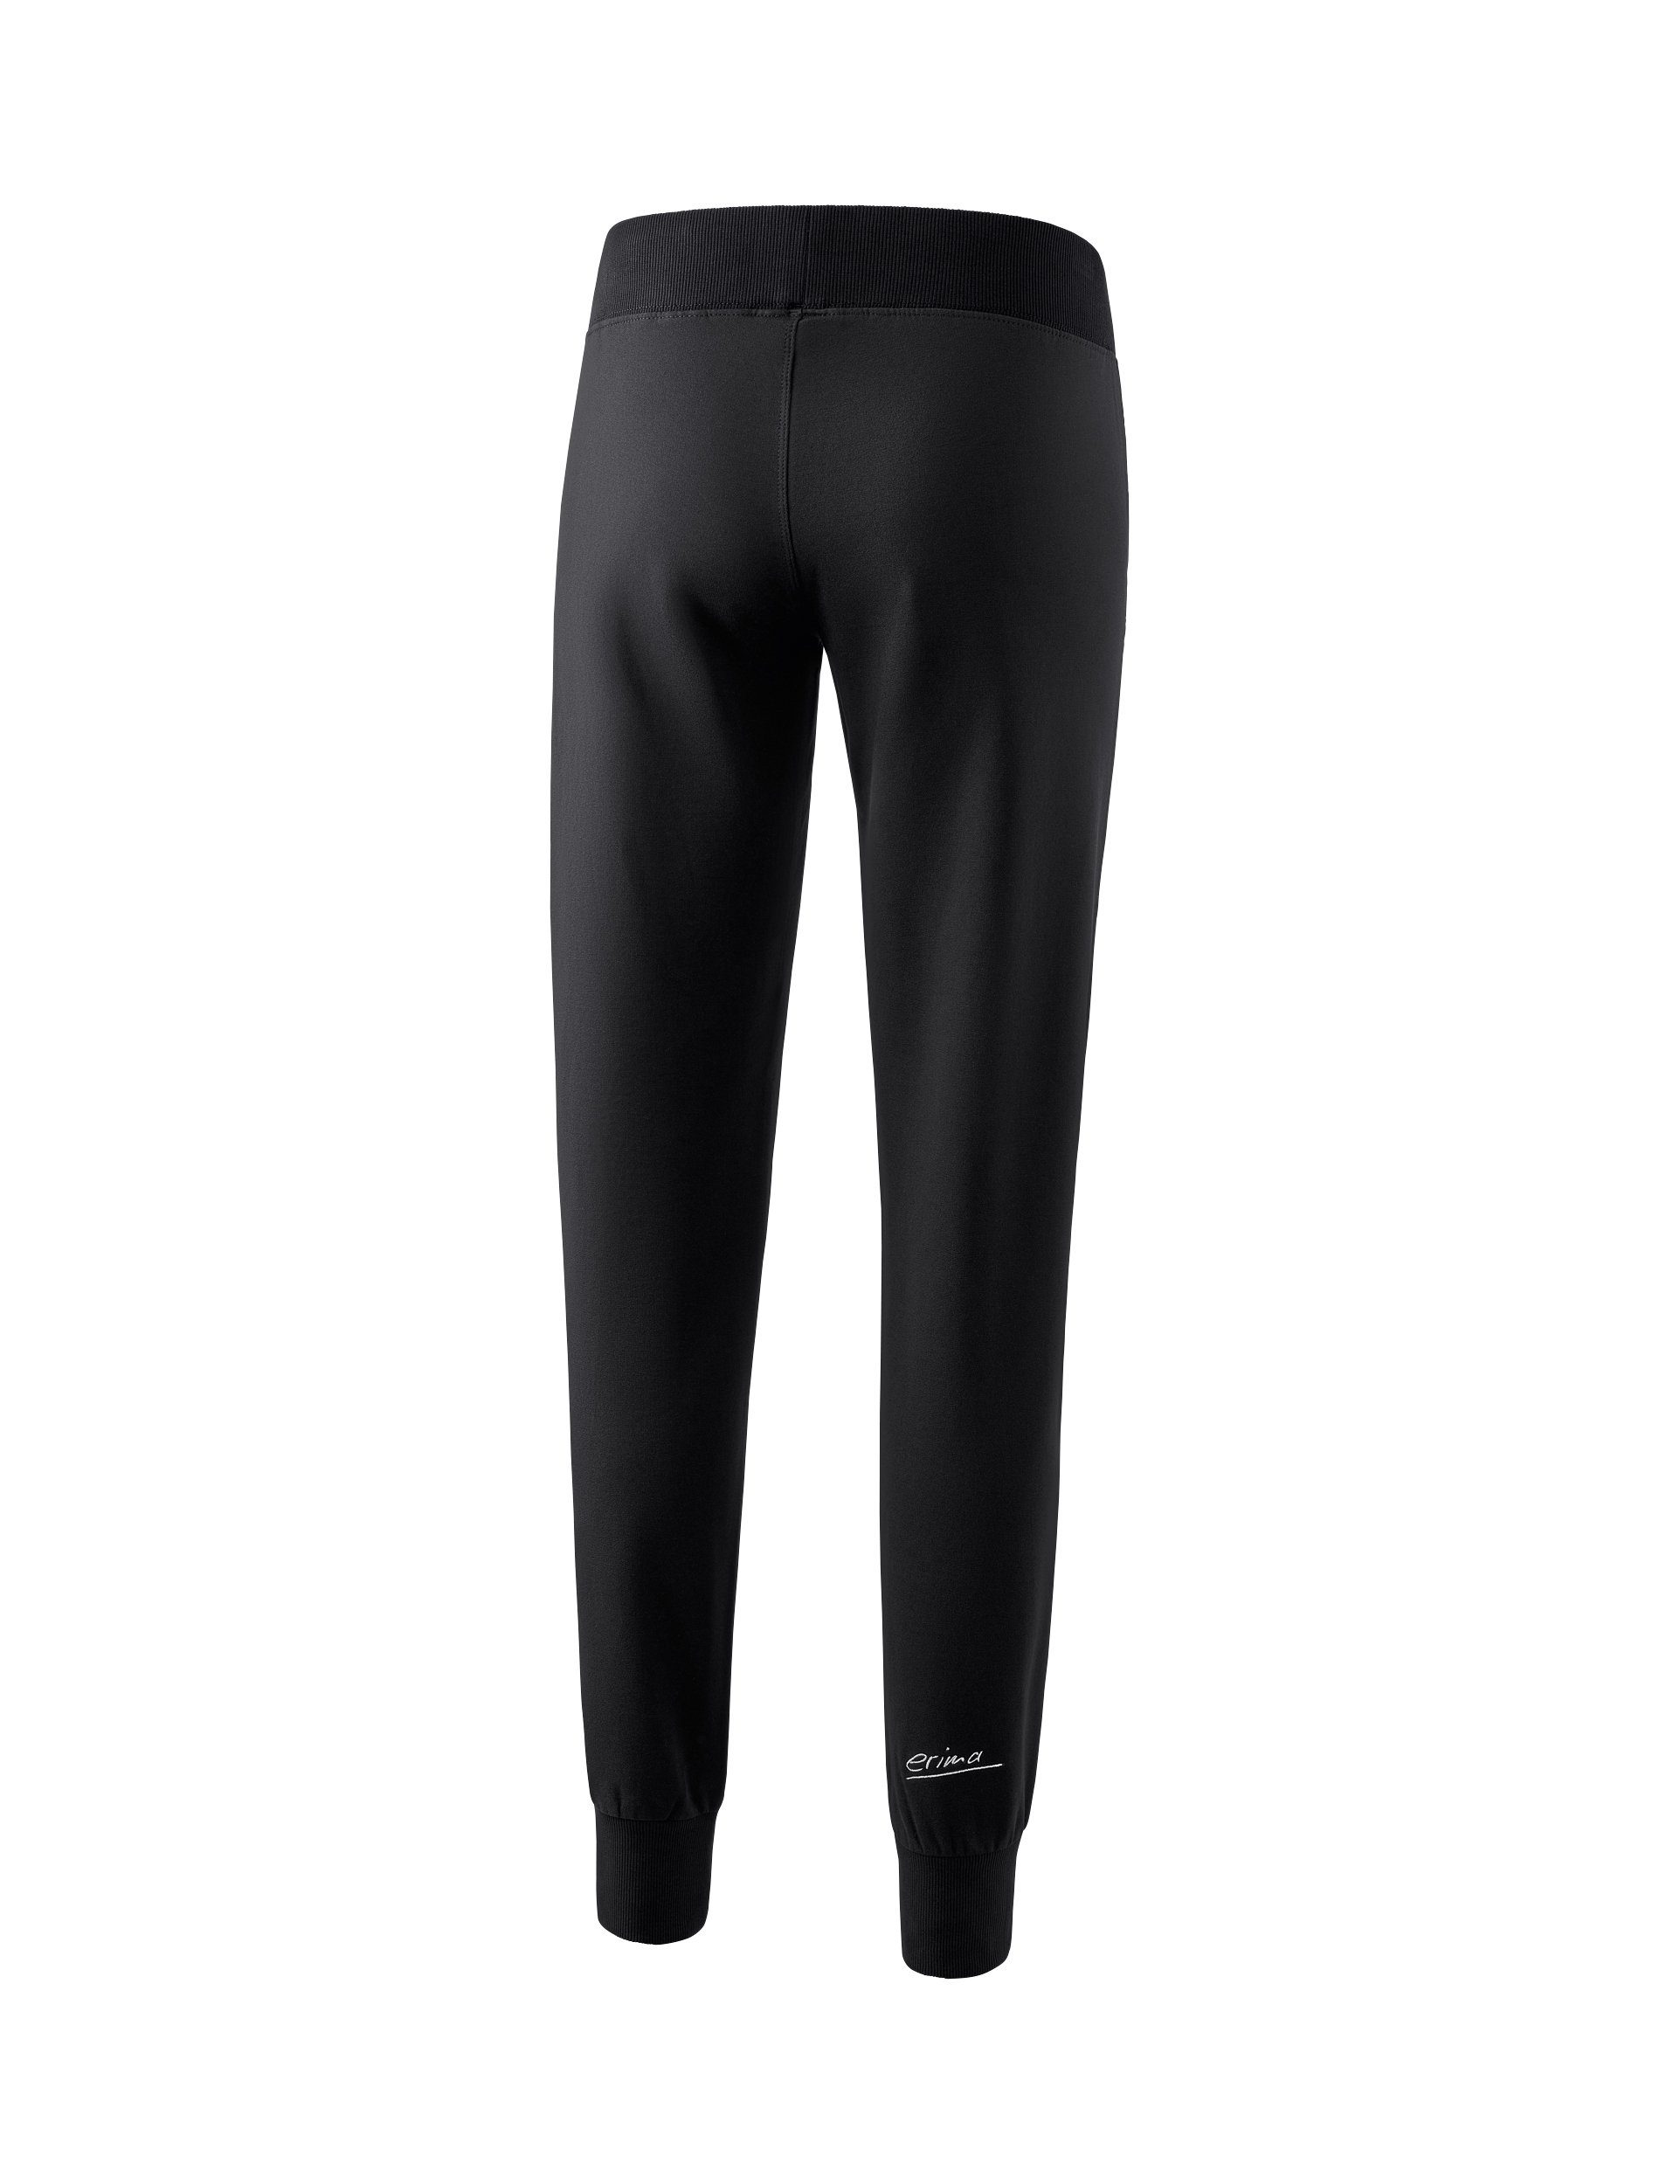 Erima Sporthose cuff sweatpants with black